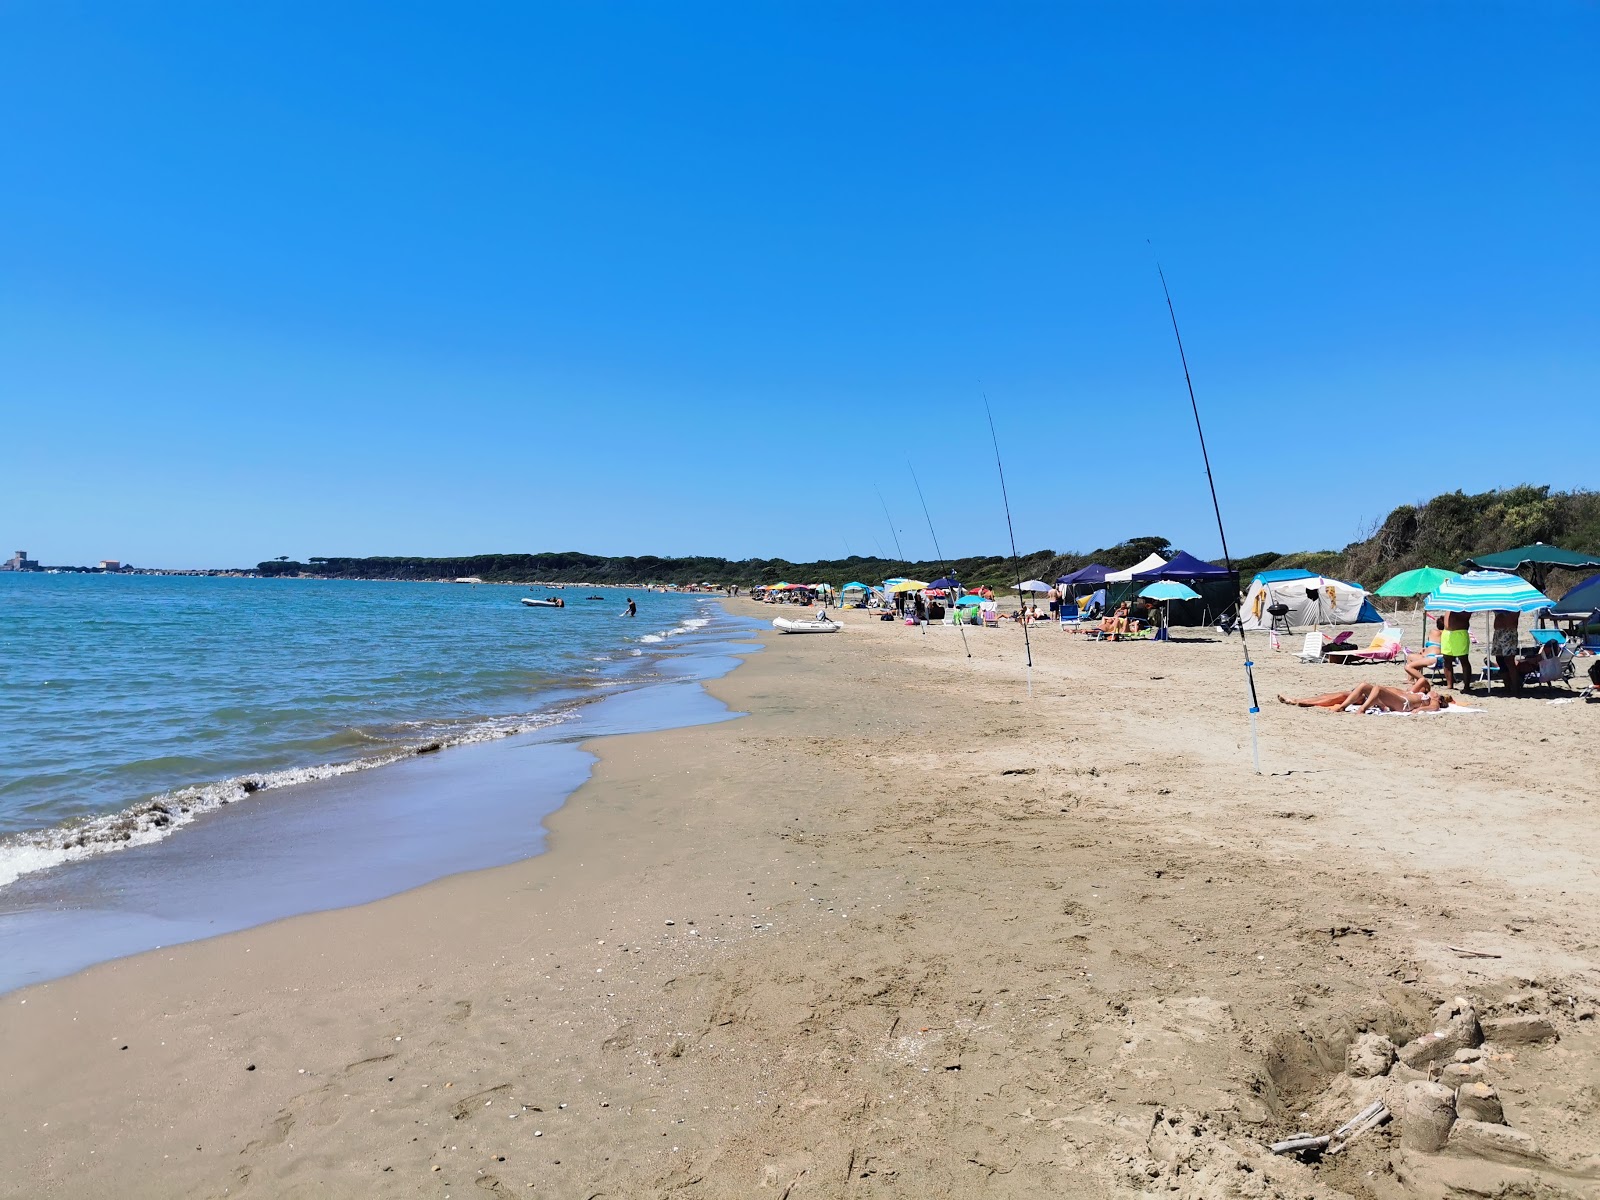 Foto av Spiaggia di Valmontorio med brunsand yta